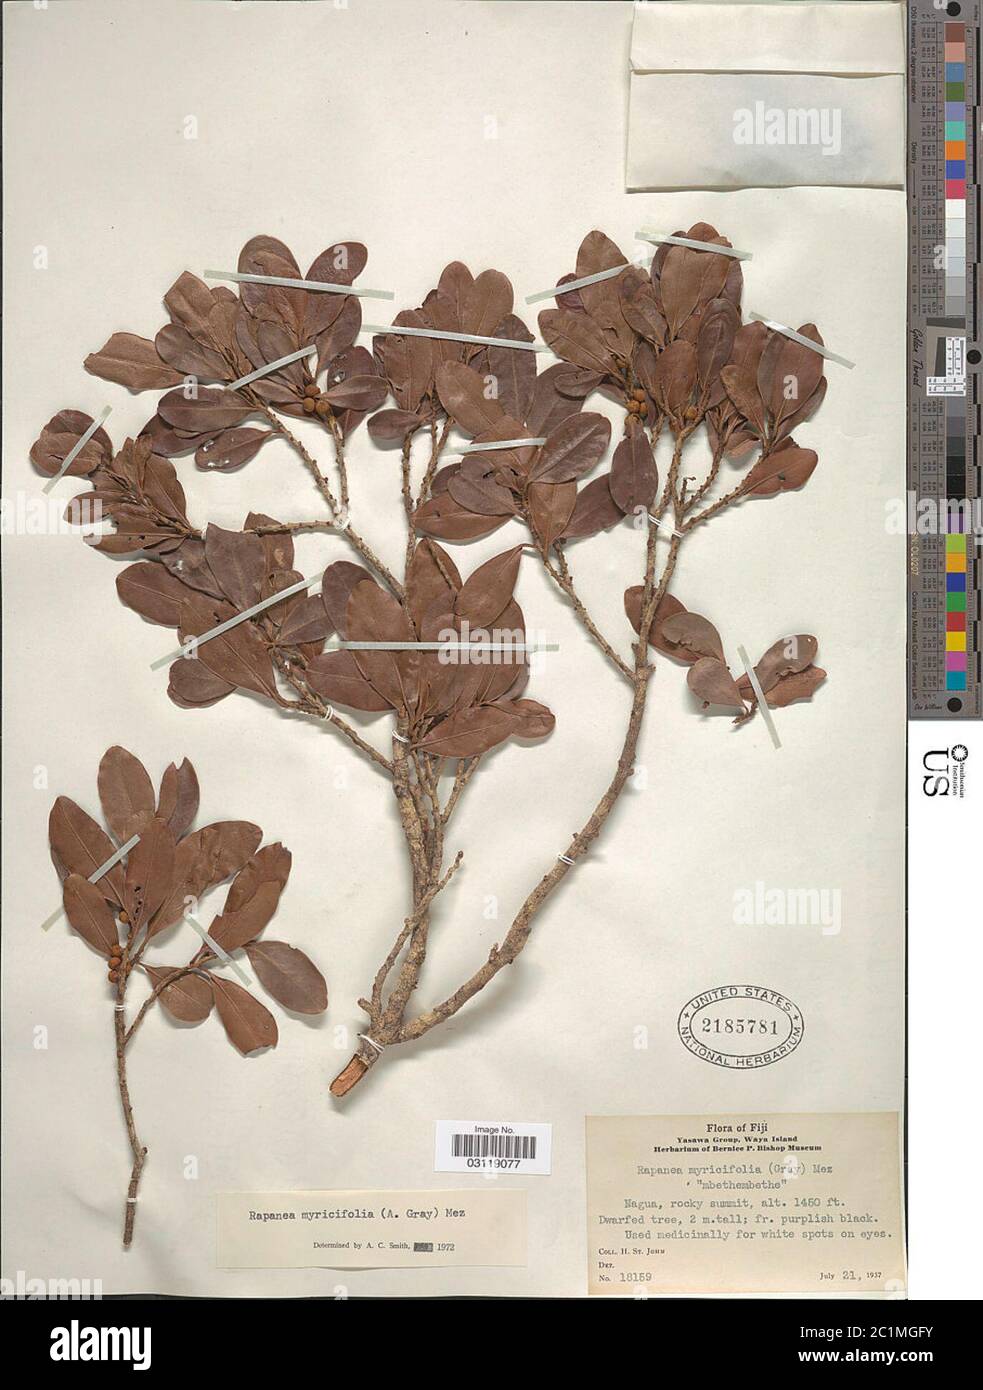 Rapanea myricifolia A Gray Mez Rapanea myricifolia A Gray Mez. Stock Photo